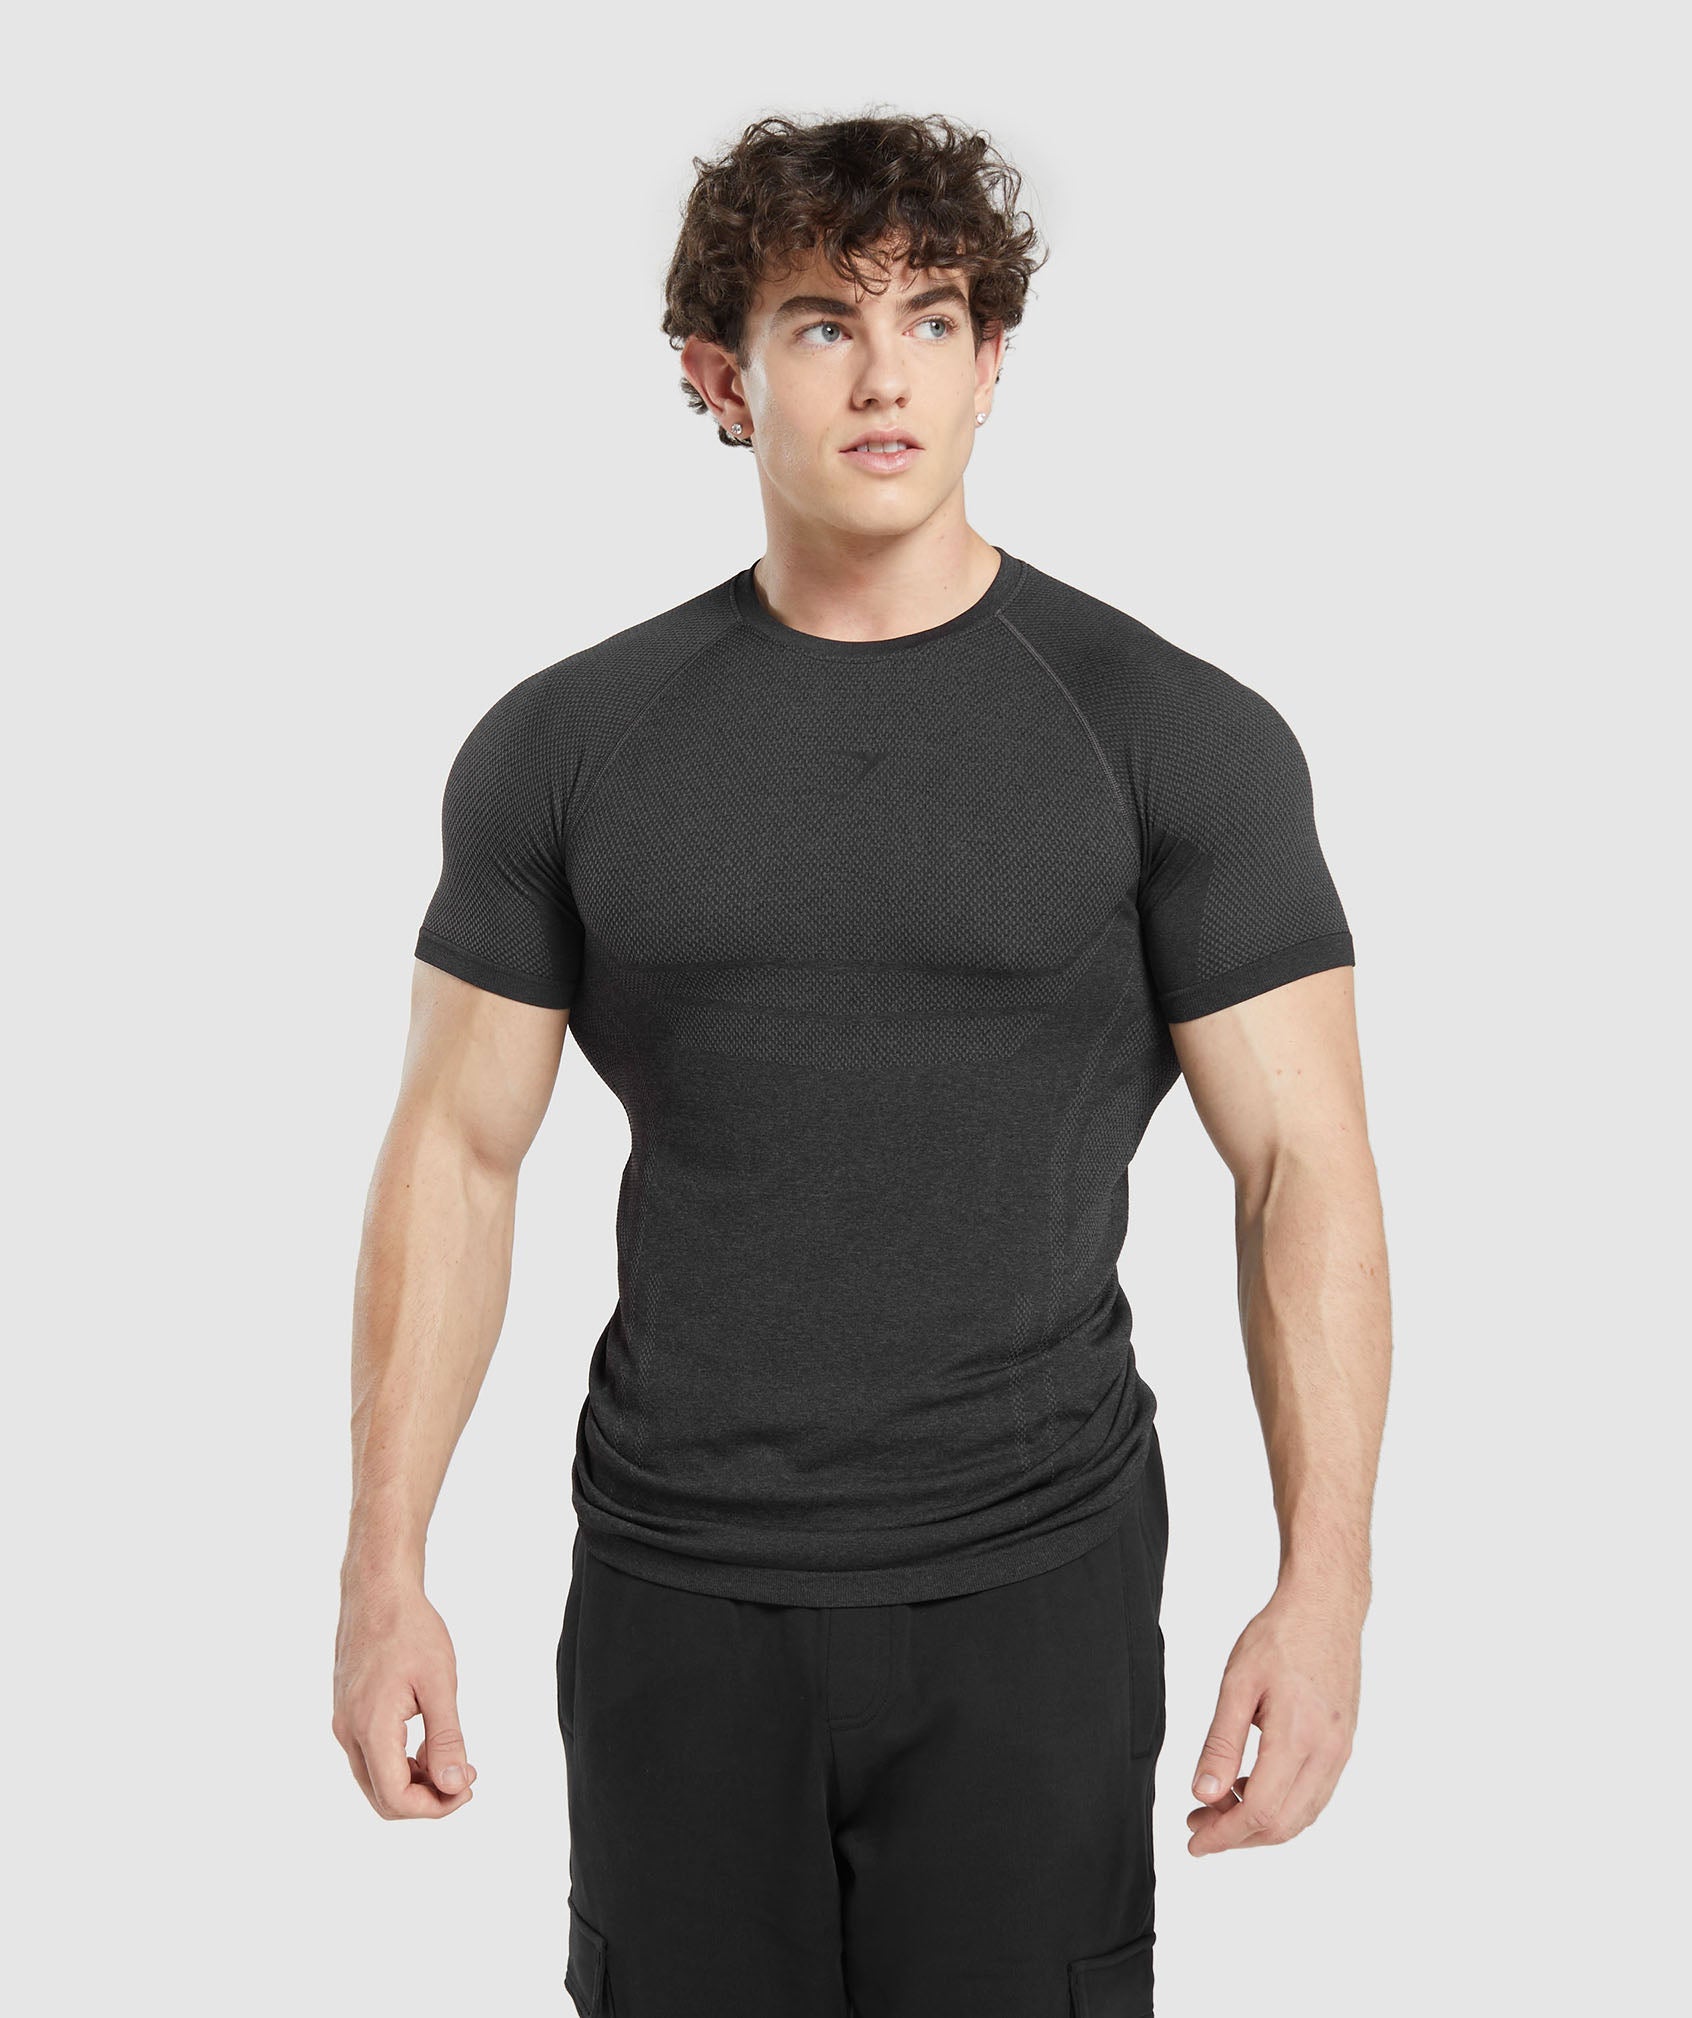 Elite Seamless T-Shirt in Black/Dark Grey - view 8